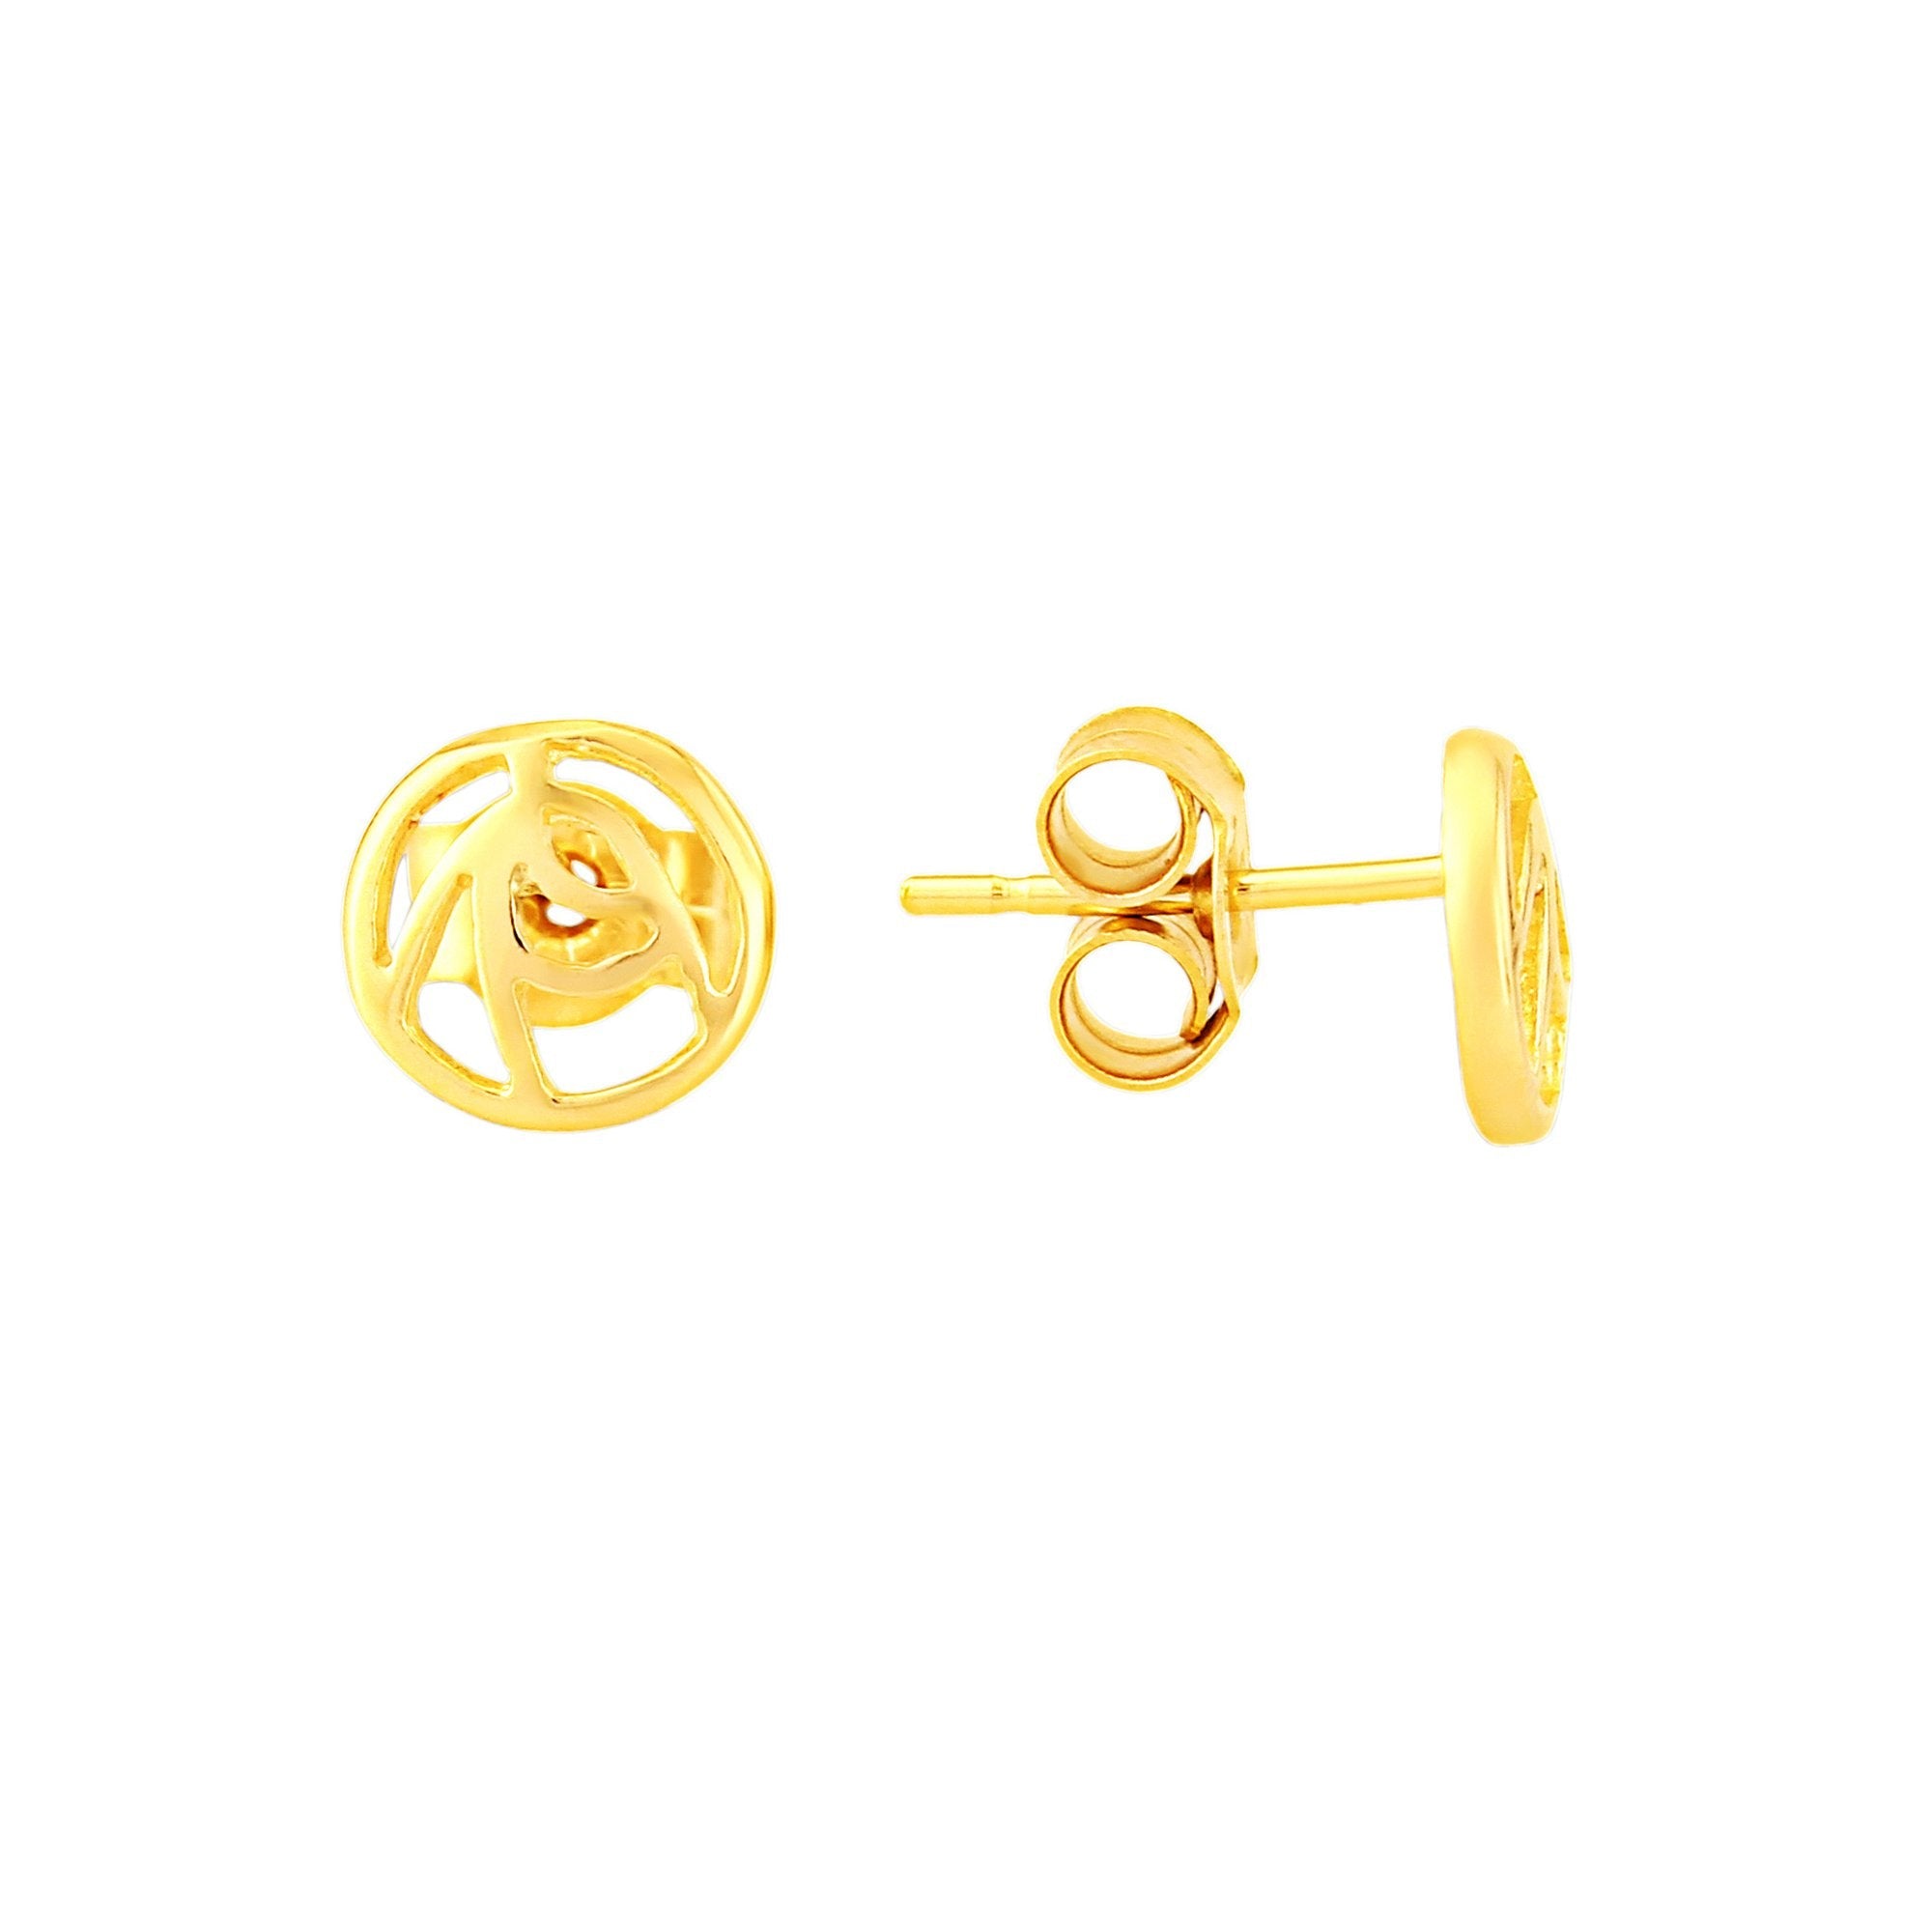 9ct gold celtic stud earrings